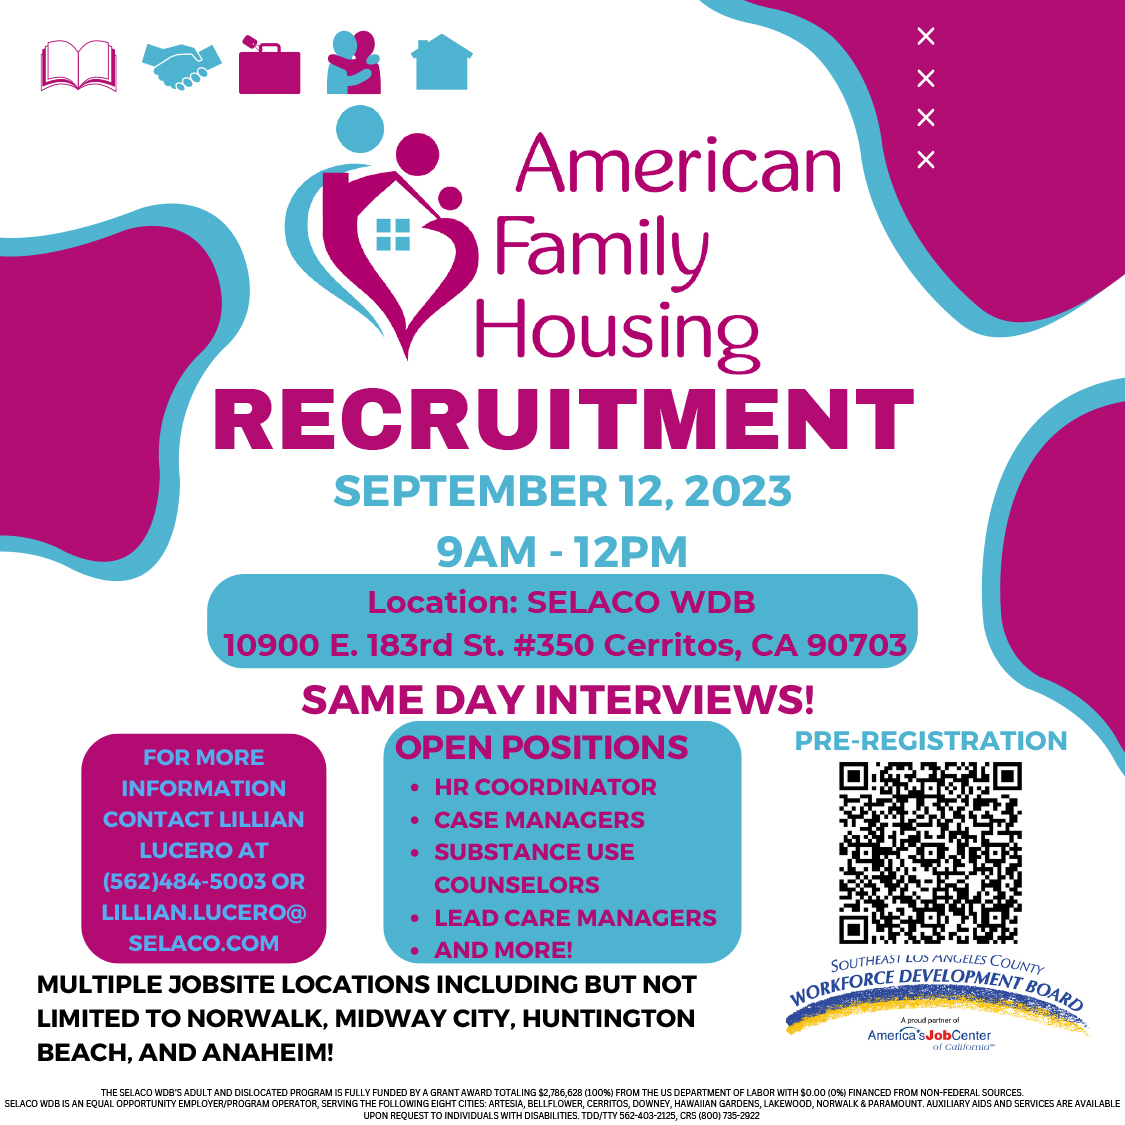 Pre-register Here!  forms.office.com/r/WcNqu36qcq

#AmericanFamilyHousing #selacowdb #ajcccerritos #jobseekers #jobrecruitment #directhire #cerritosca #jobs #nowhiring